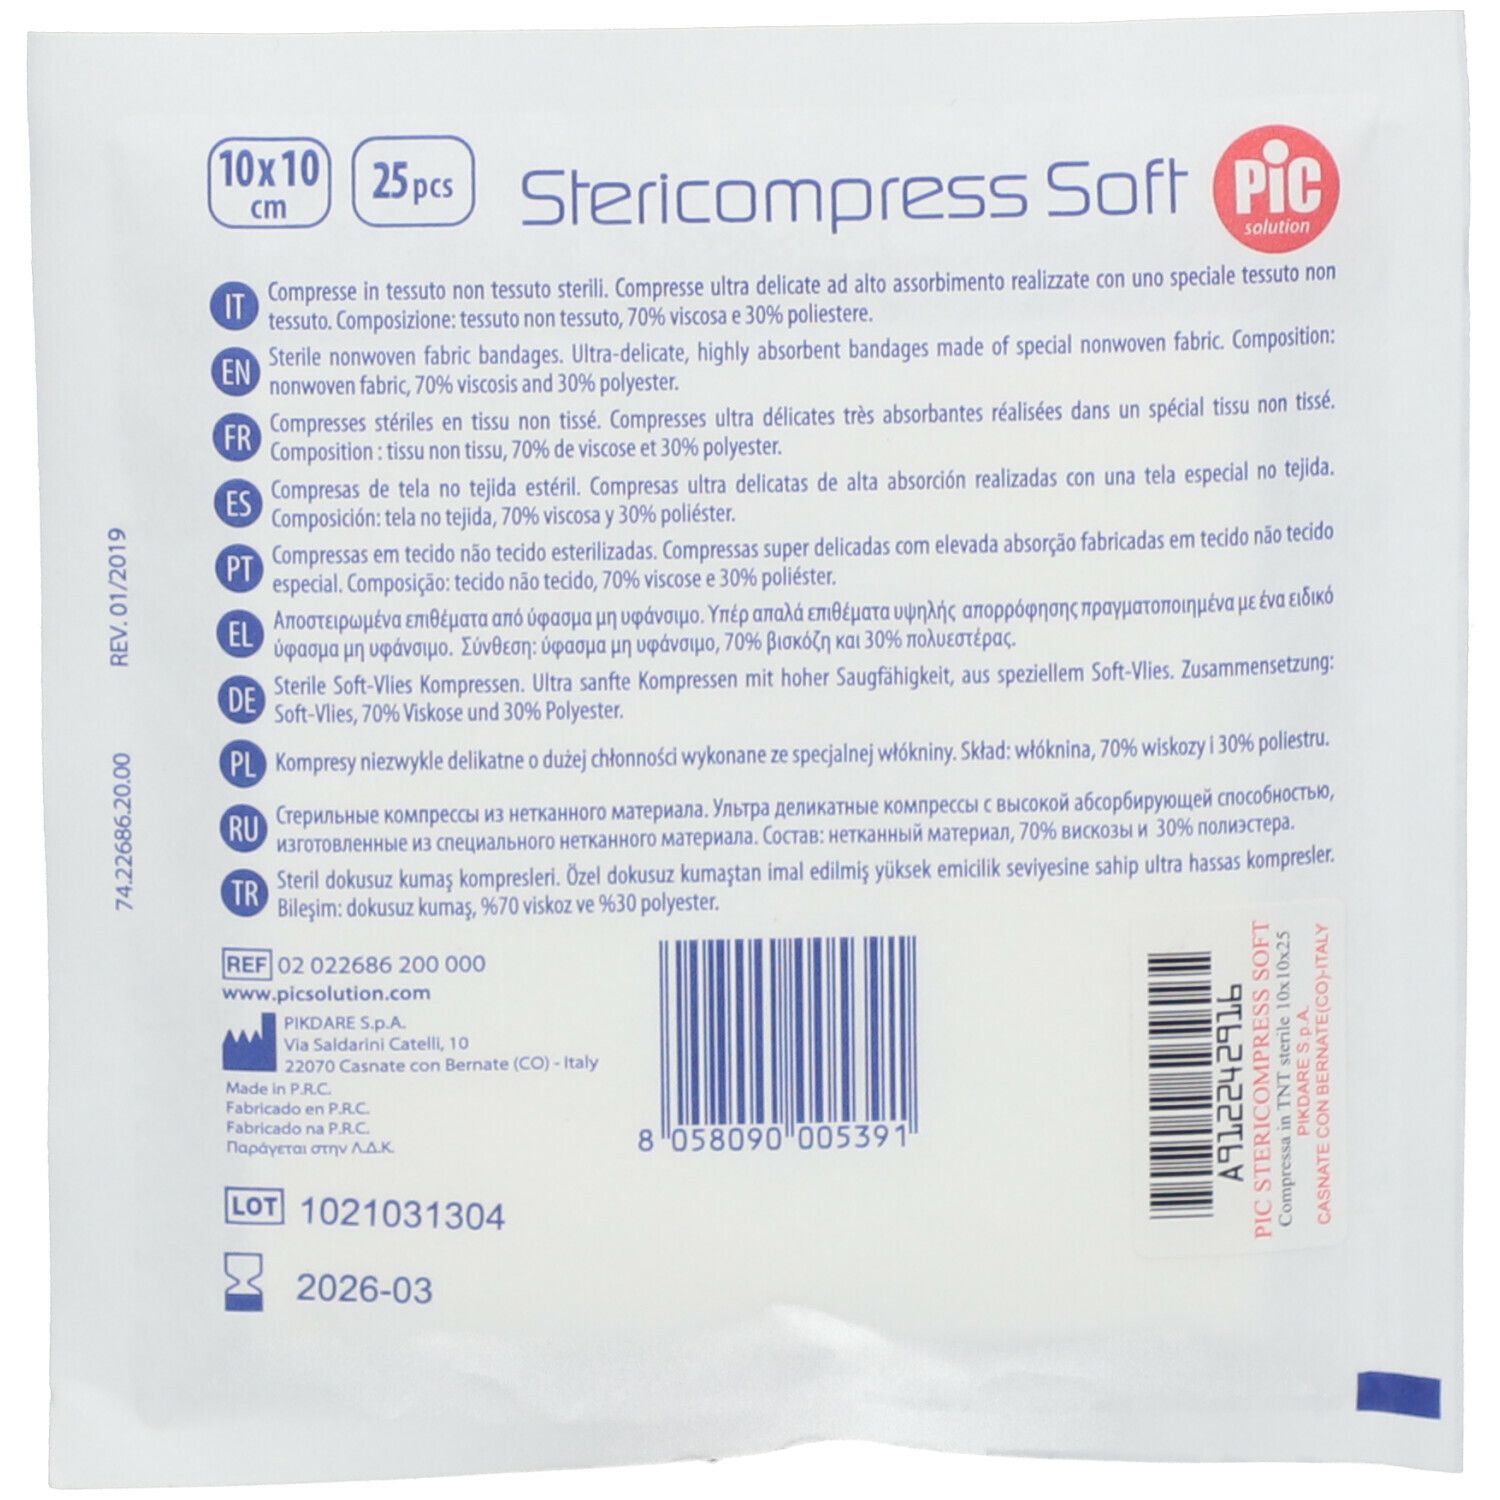 PiC Stericompress Soft Compresse